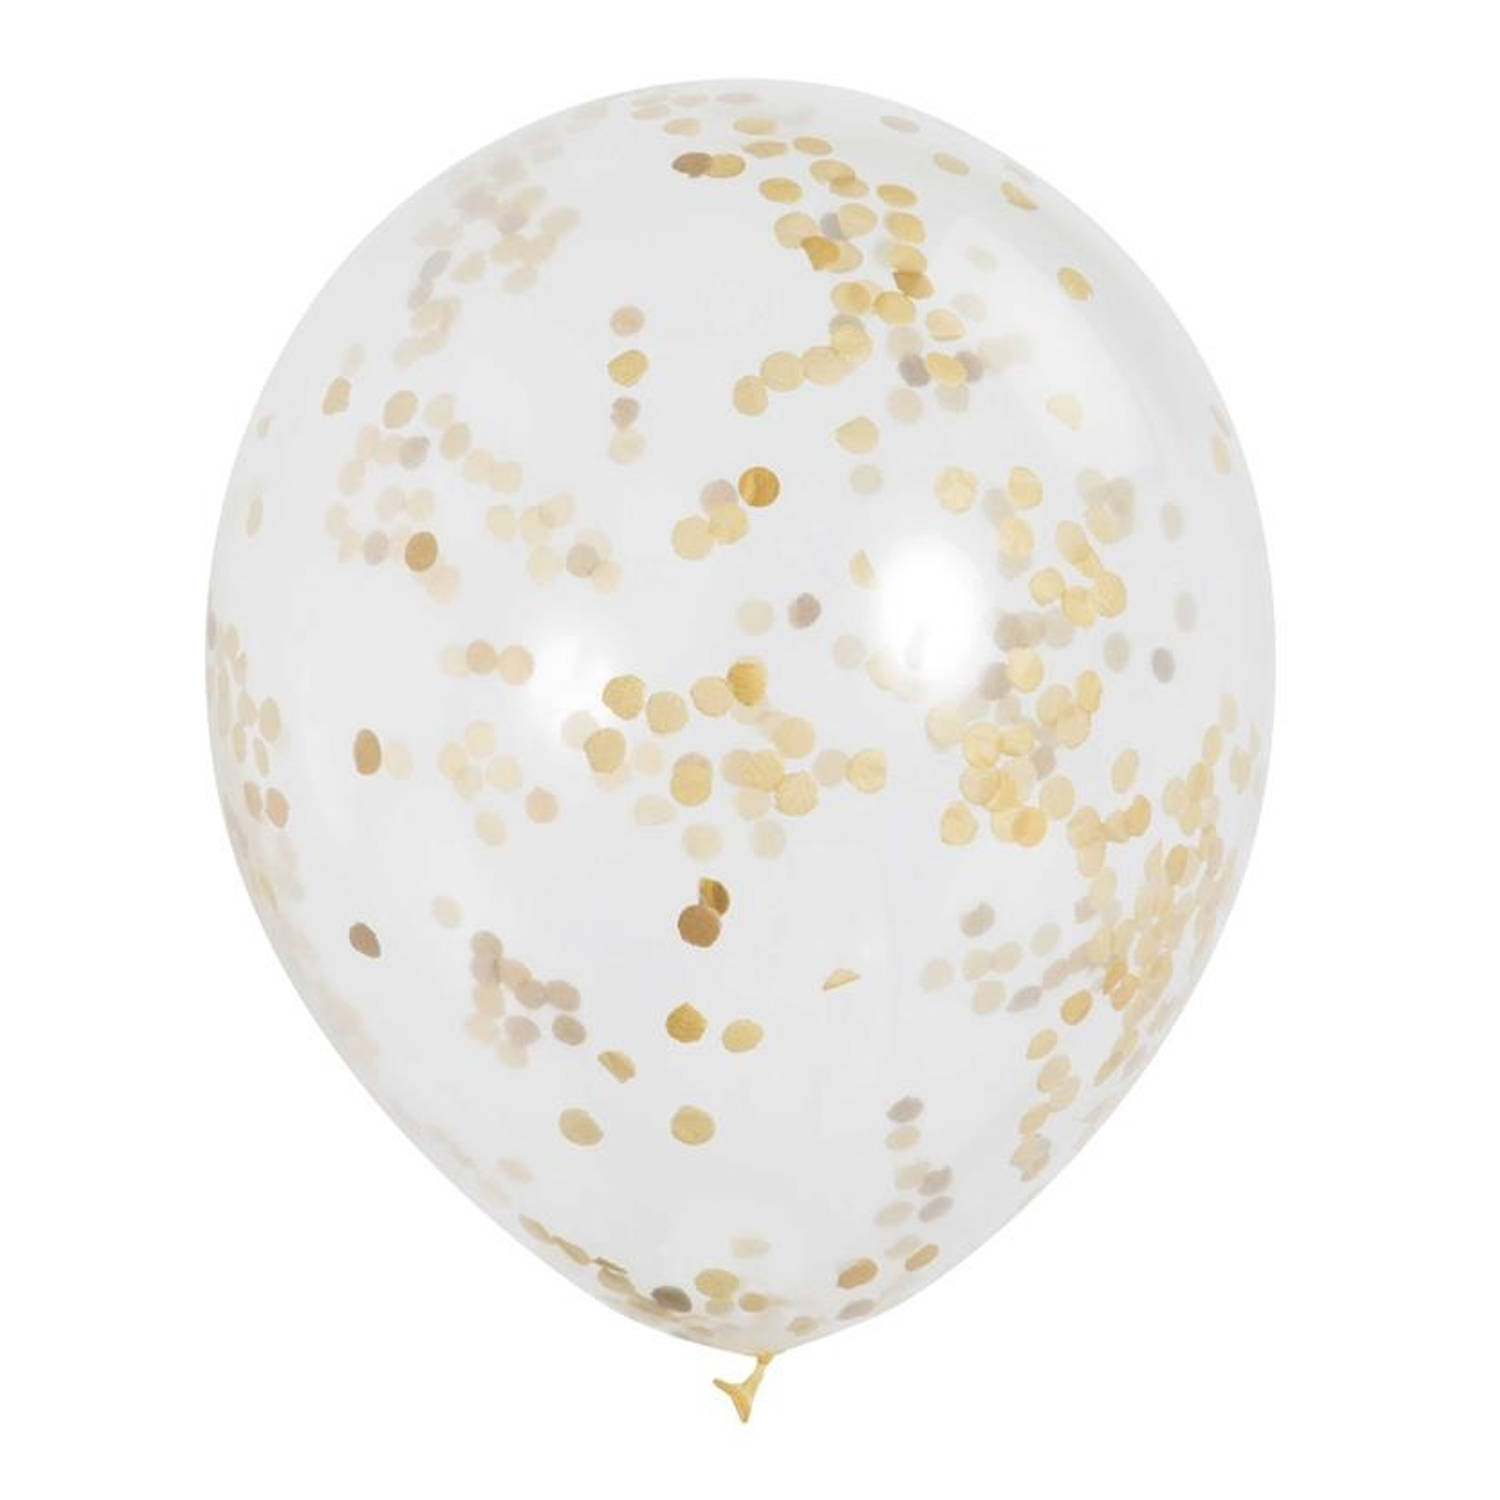 Haza Original confetti ballonnen goud 6 stuks 30 cm